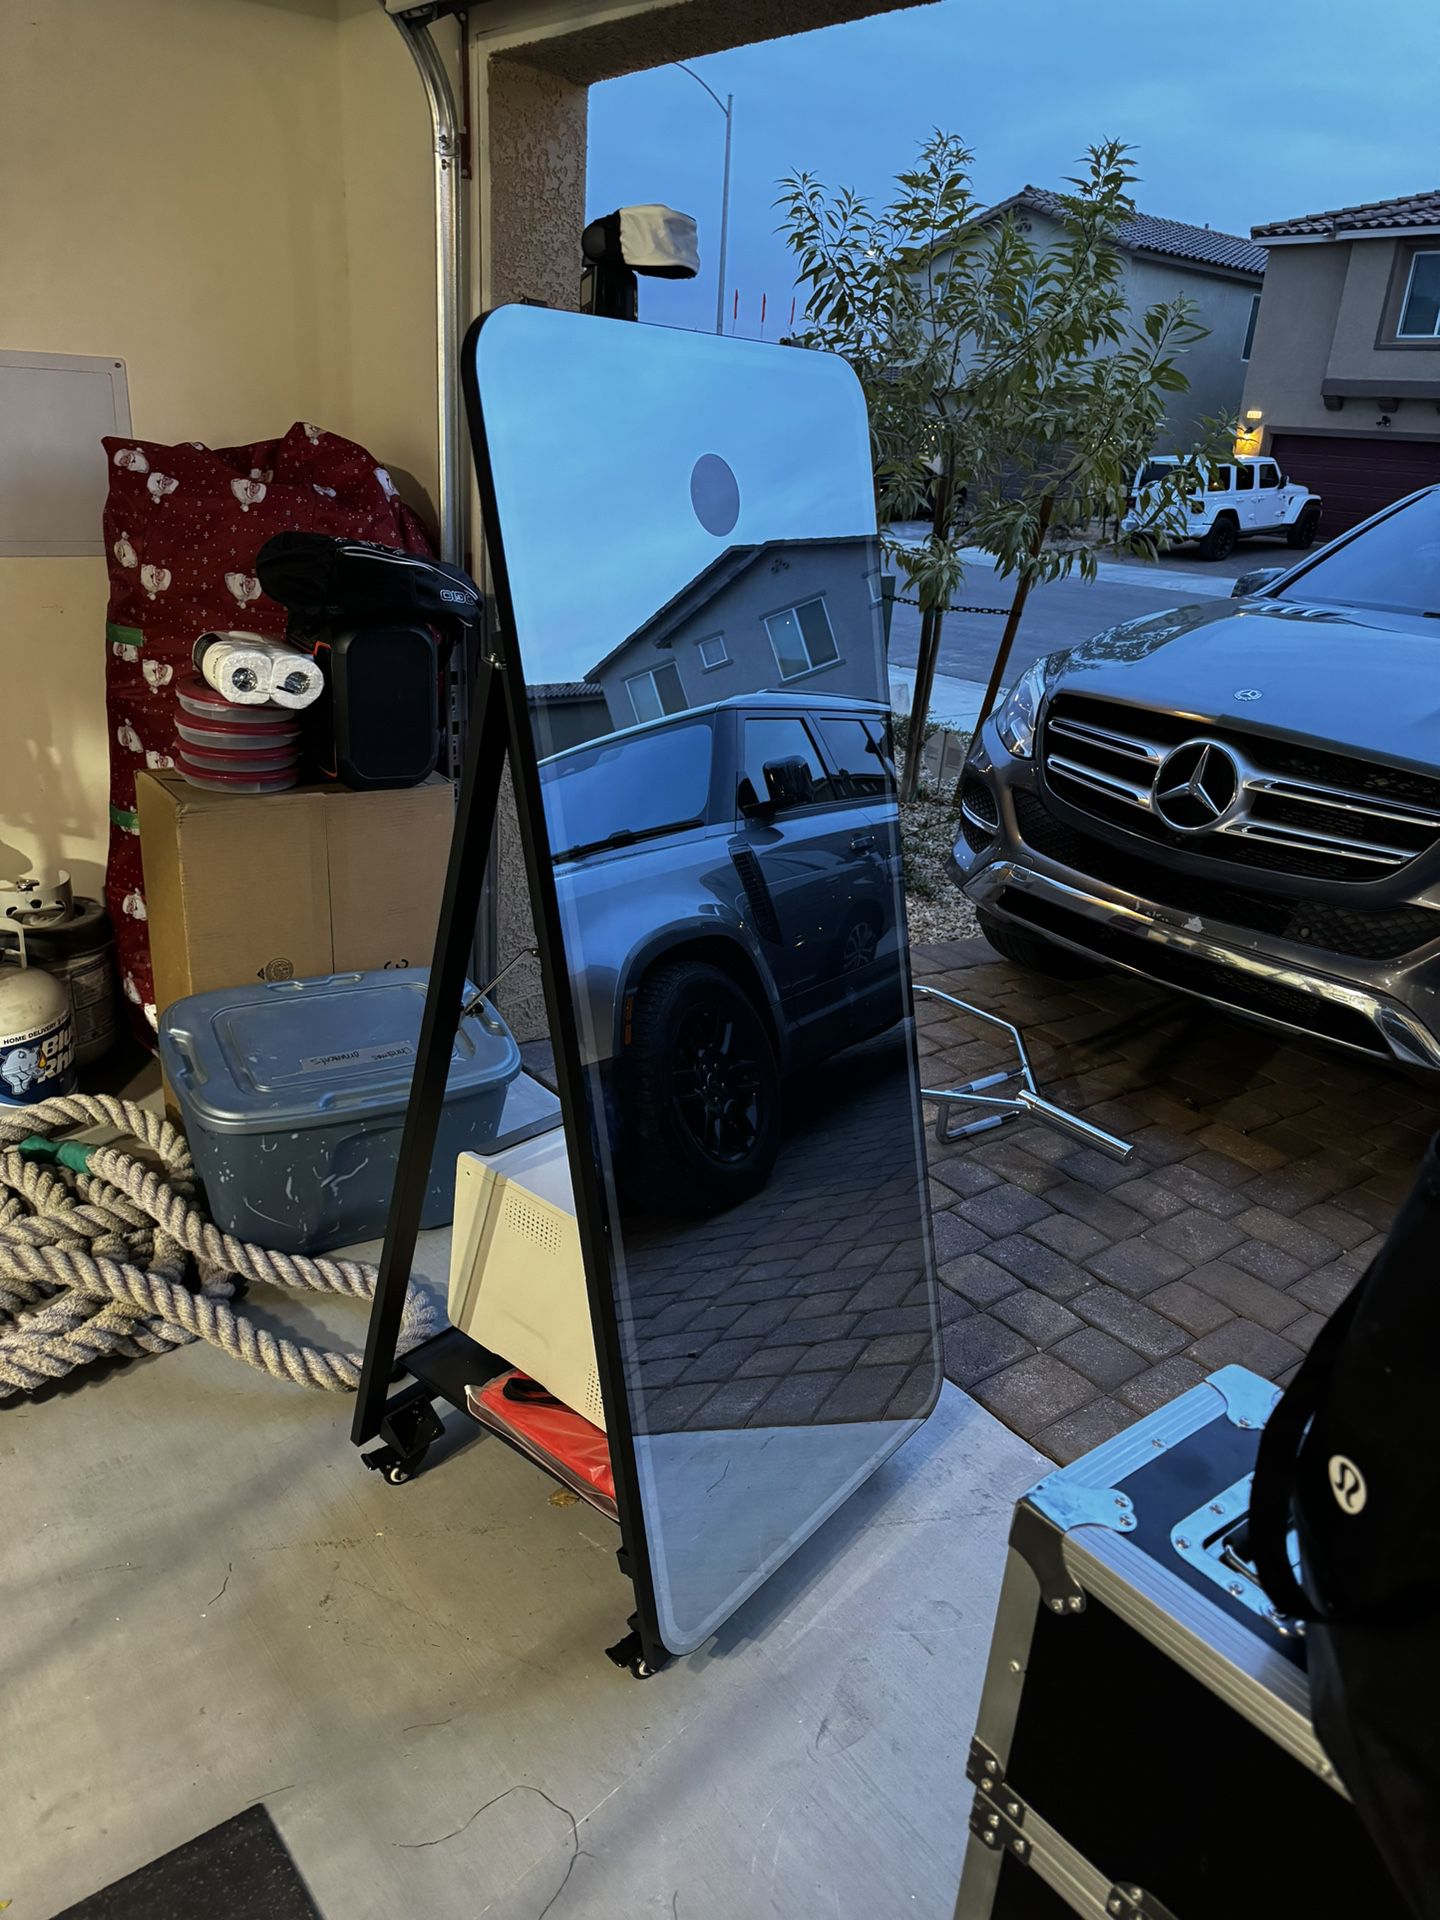 Magic mirror photo Booth